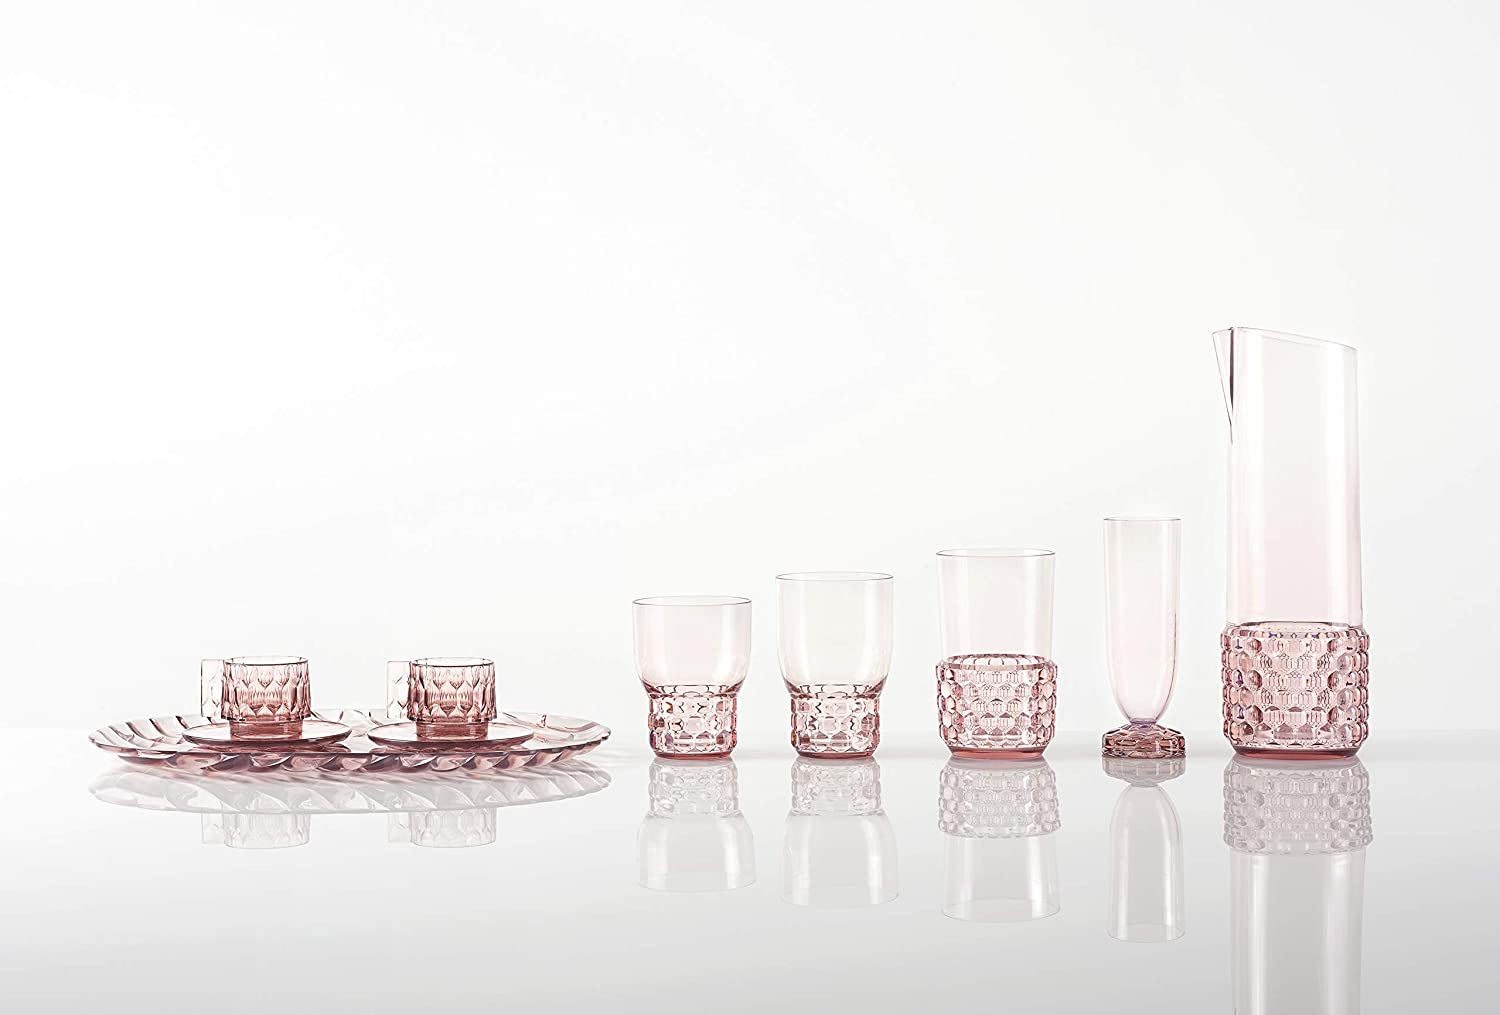 The full pink jellies drinkware range by Kartell.